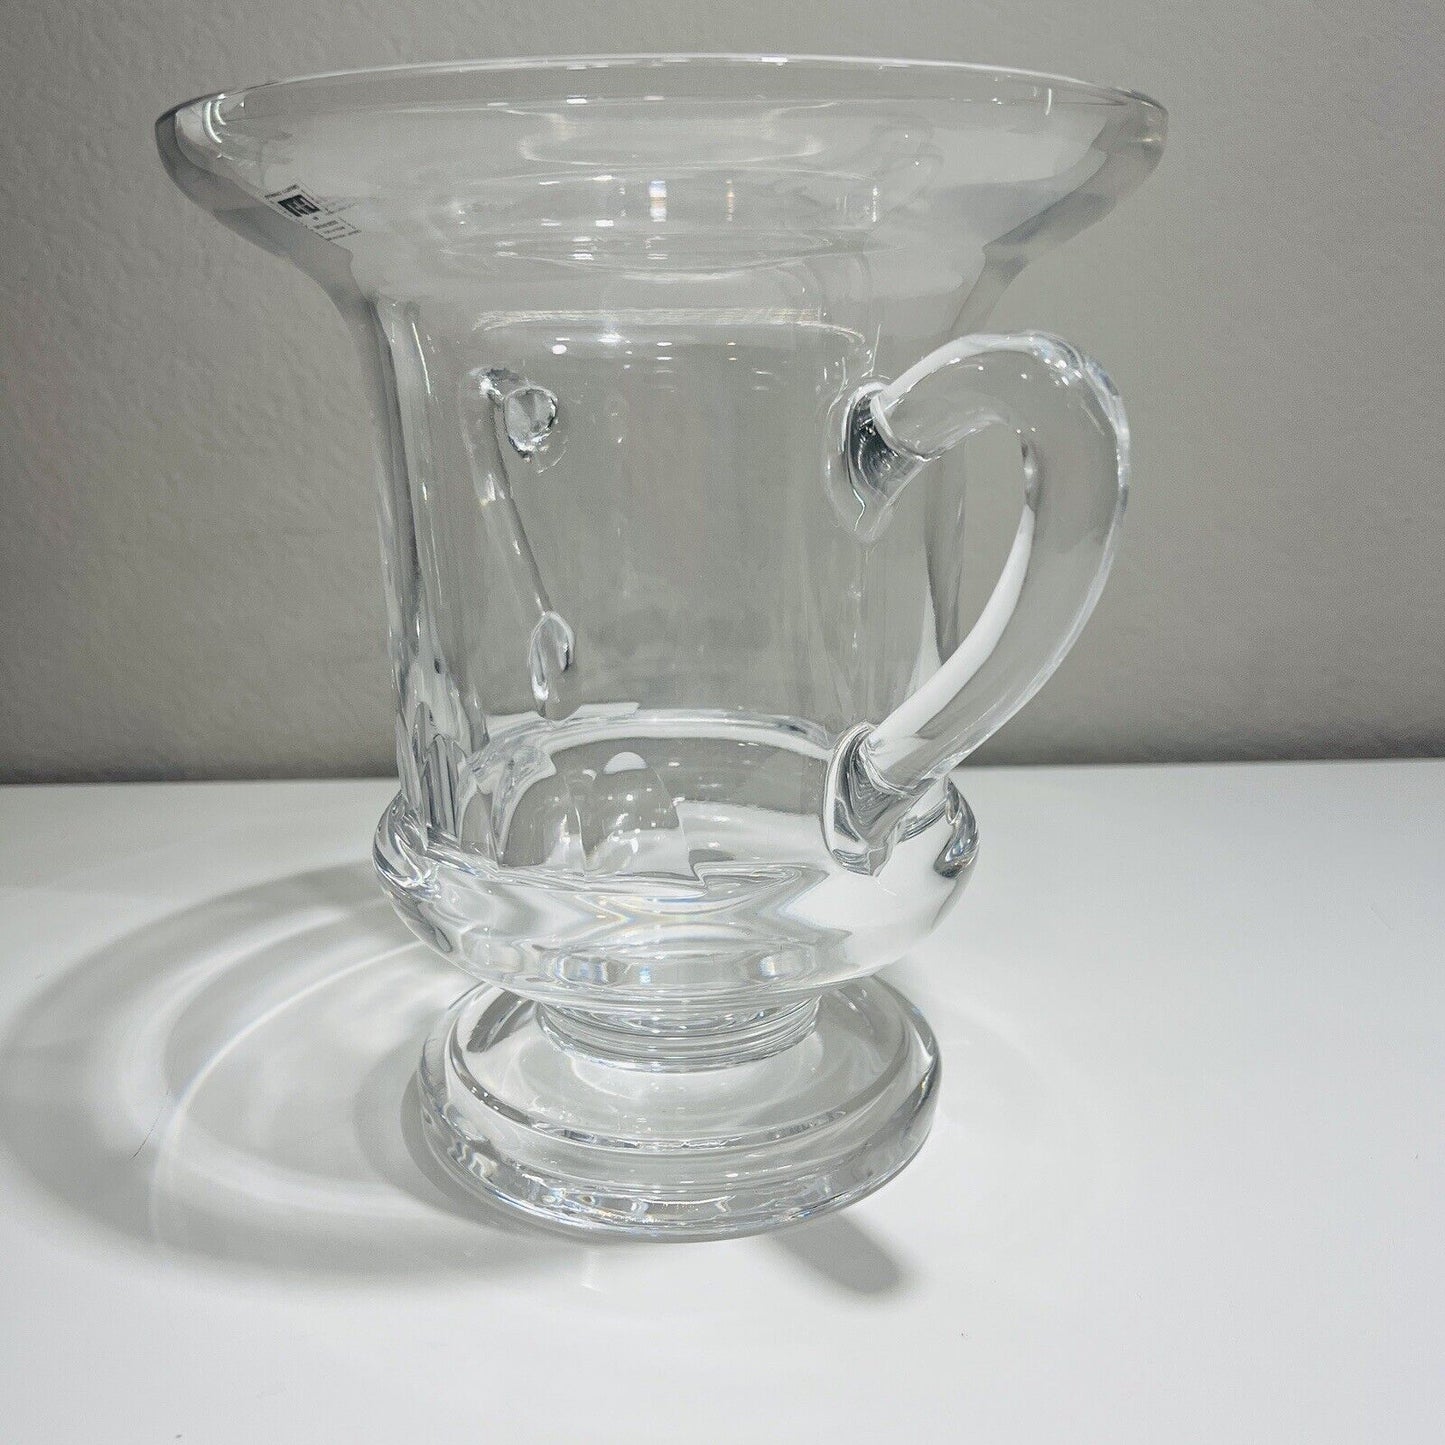 Mario Cioni Vase Crystal Large Pedestal Double Handles Glass Italy Urn Trophy